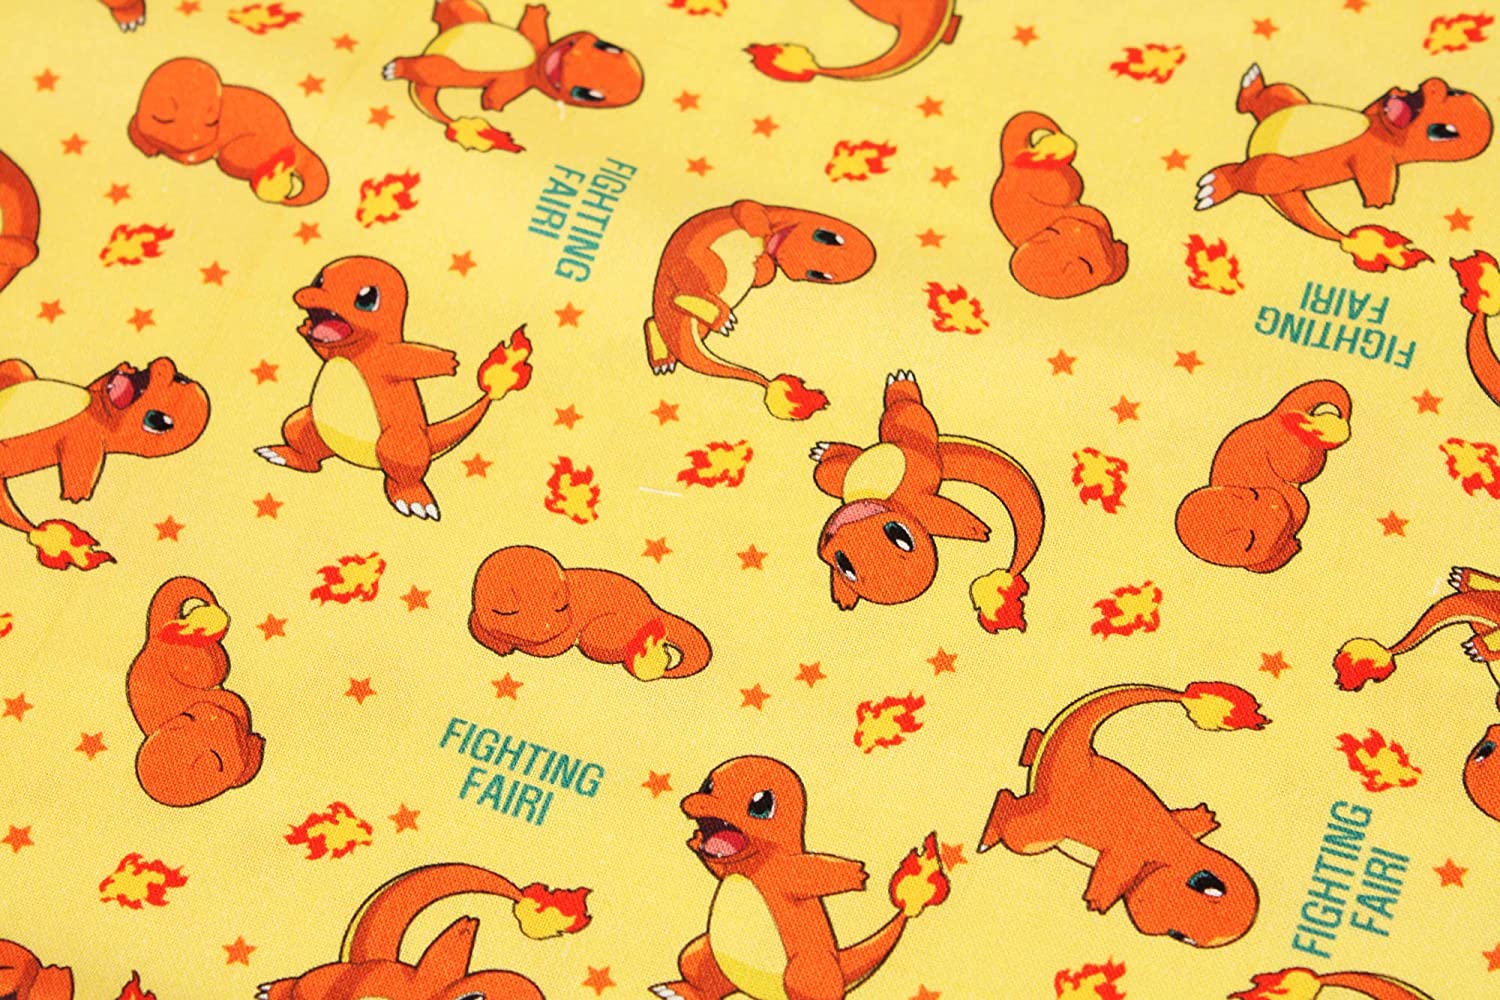 Character Fabric Pok-mon Charmander 100% Cotton Sheeting Pocket Monster Pokemon 17.7 x 43.3 inches (45 x 110 cm)